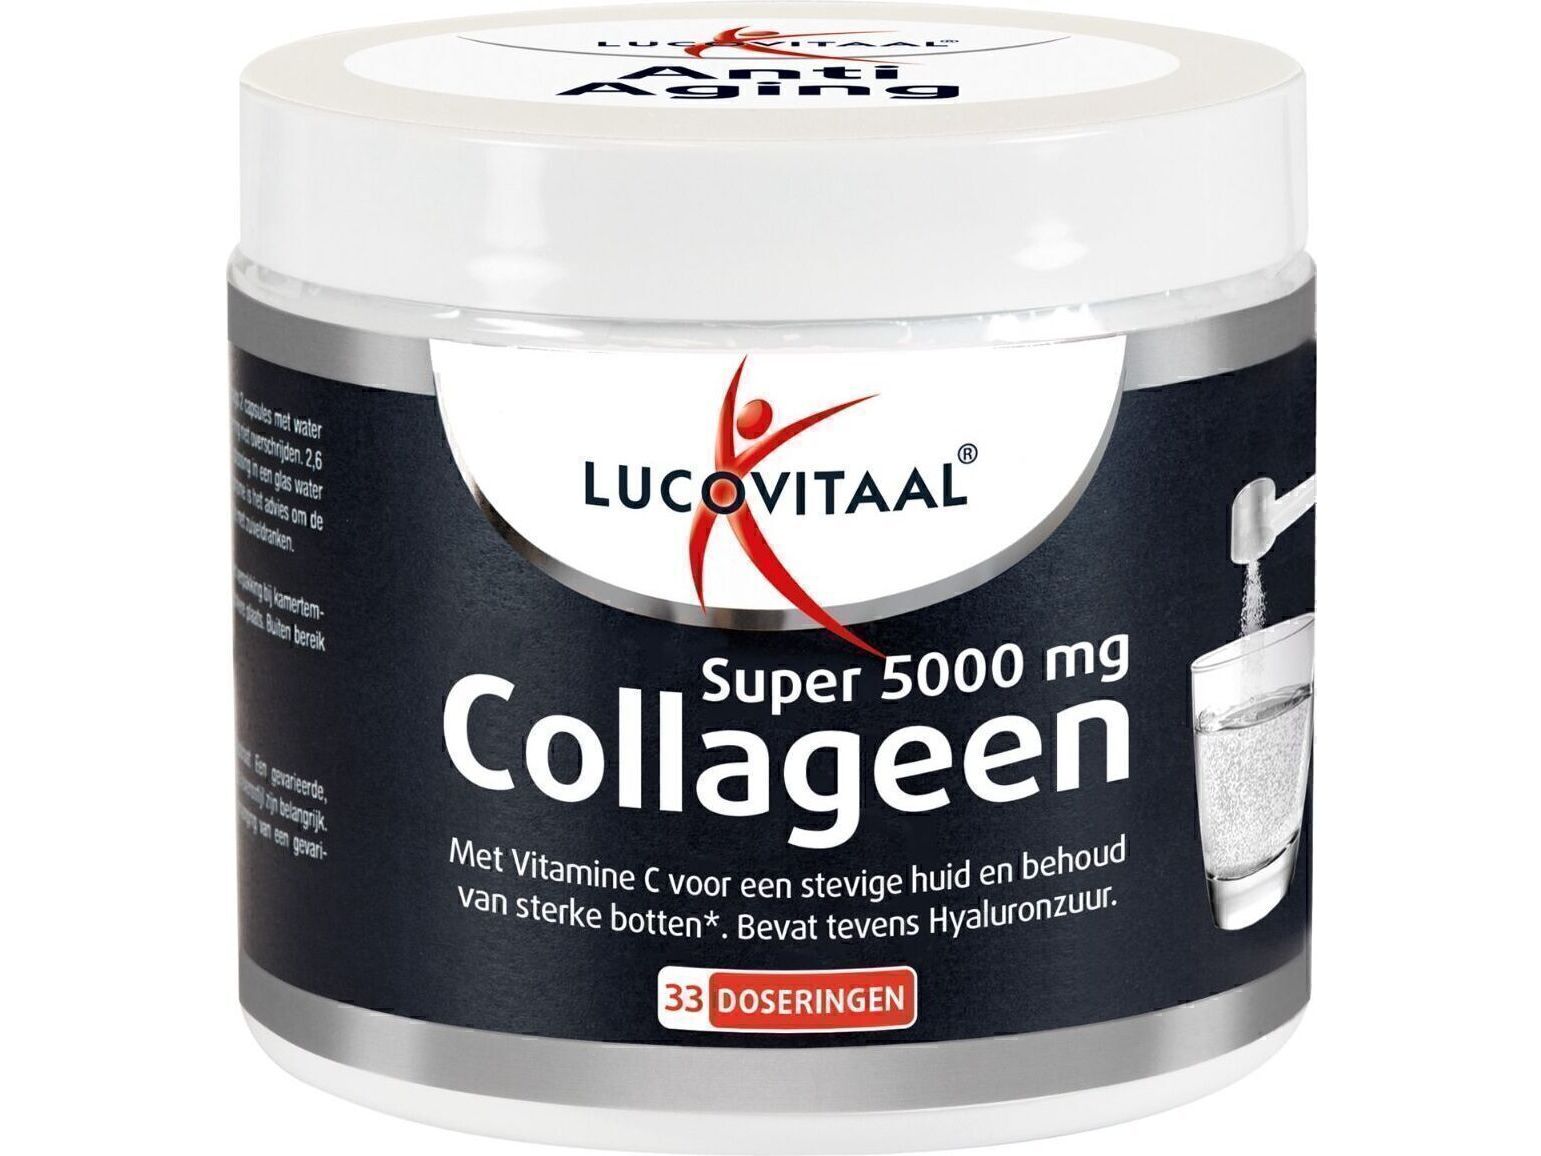 2x-lucovitaal-collagen-super-pulver-5000-mg